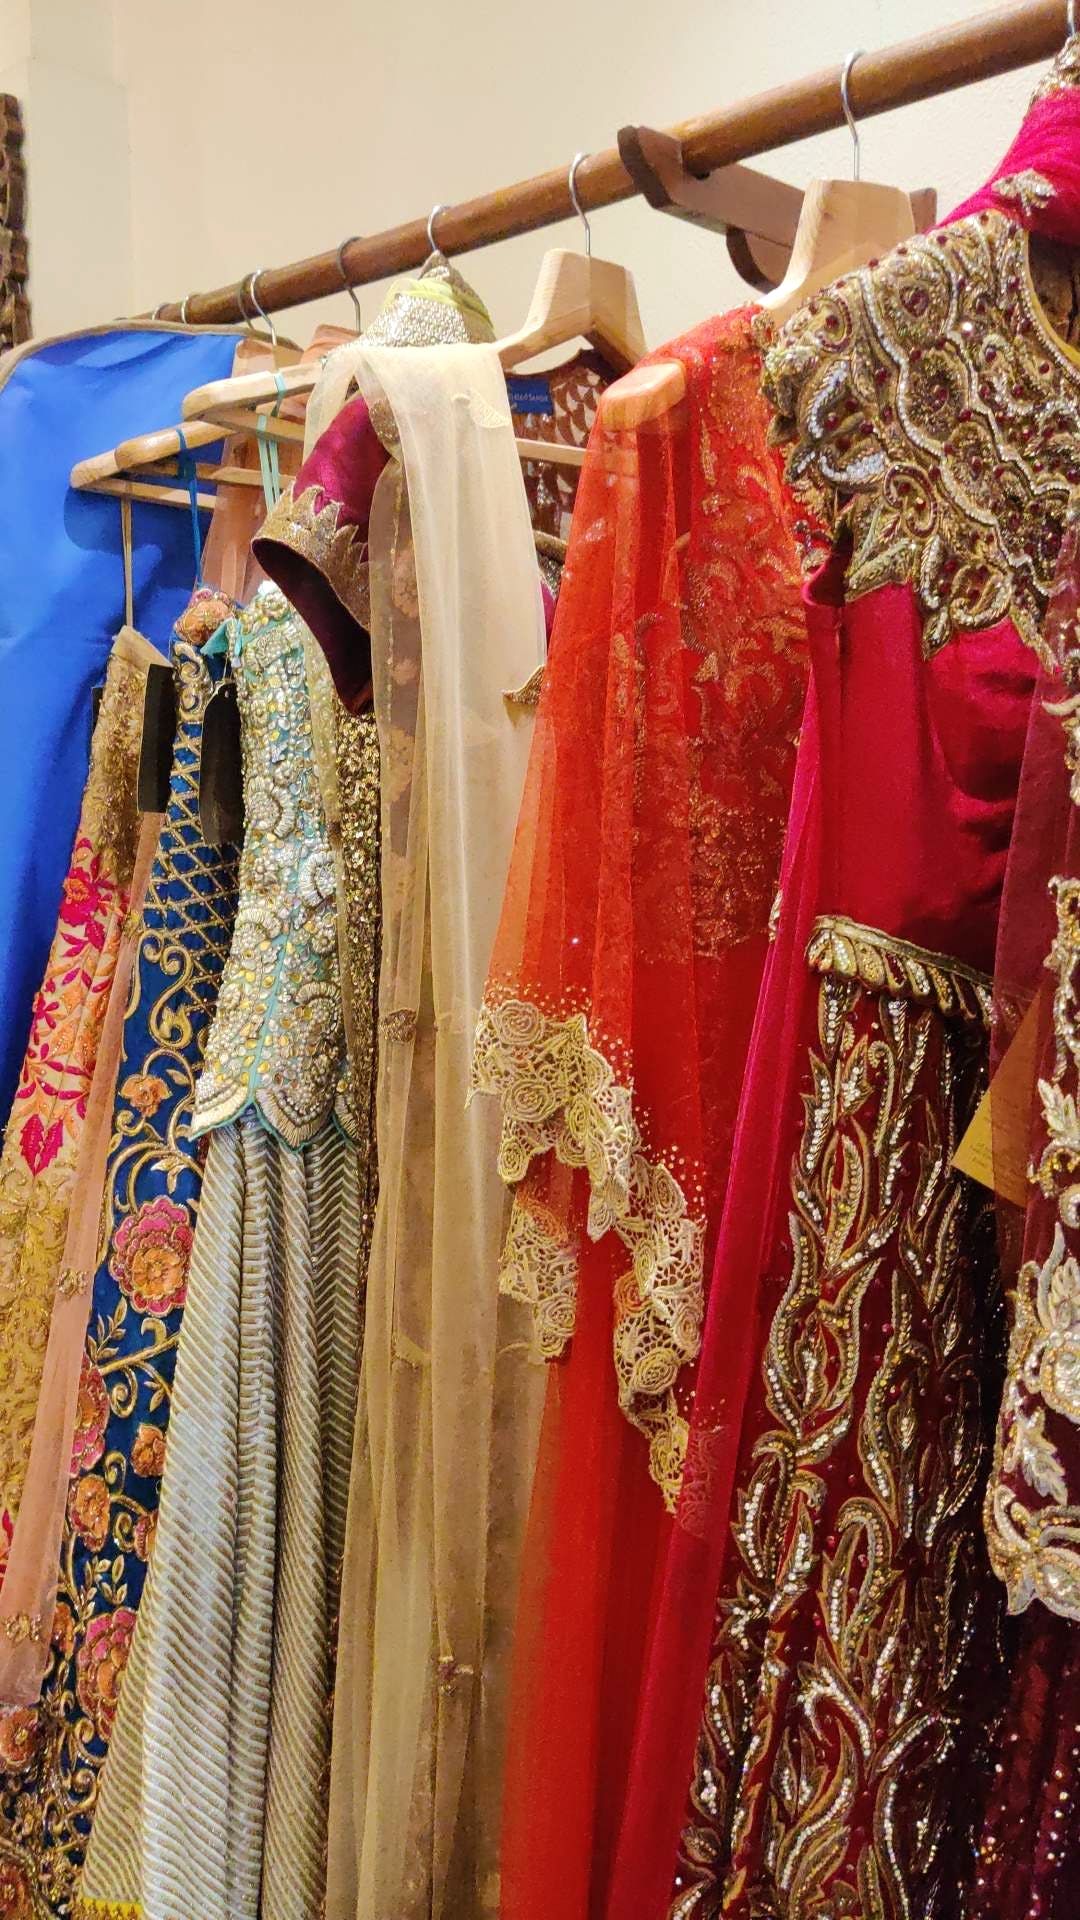 Clothing,Boutique,Public space,Dress,Formal wear,Room,Textile,Tradition,Bazaar,Market